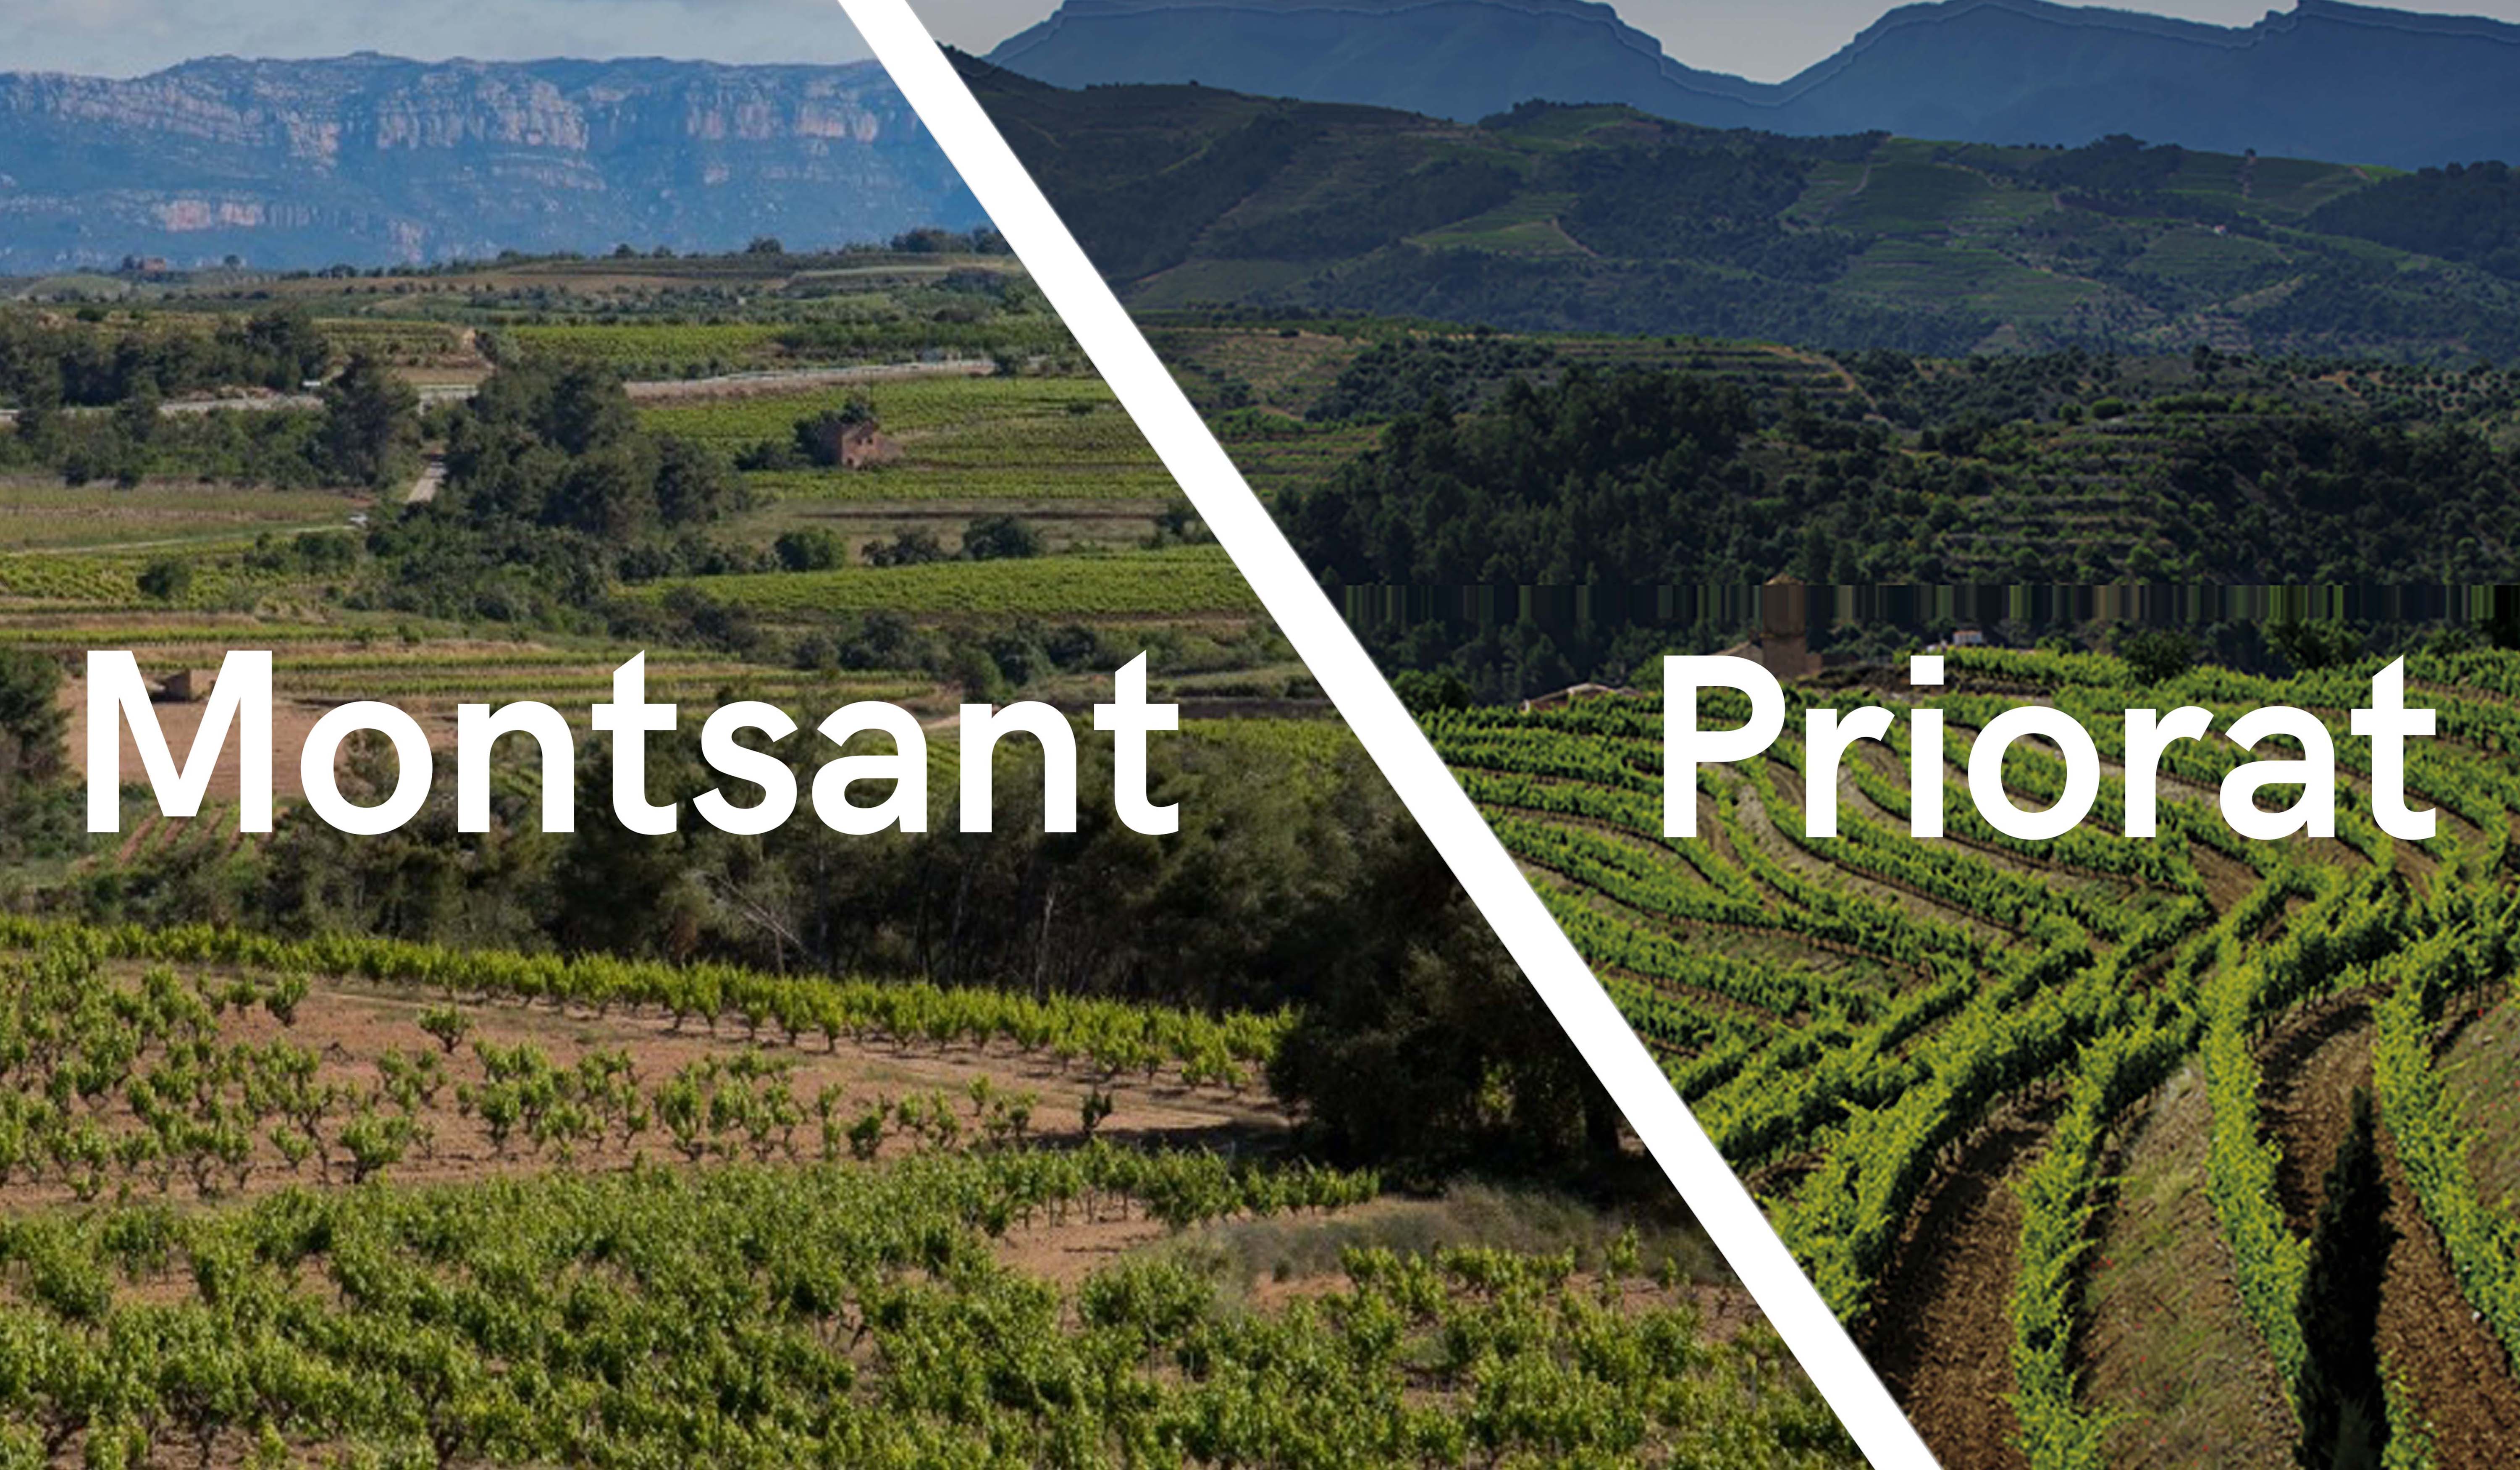 Priorat vs. Montsant